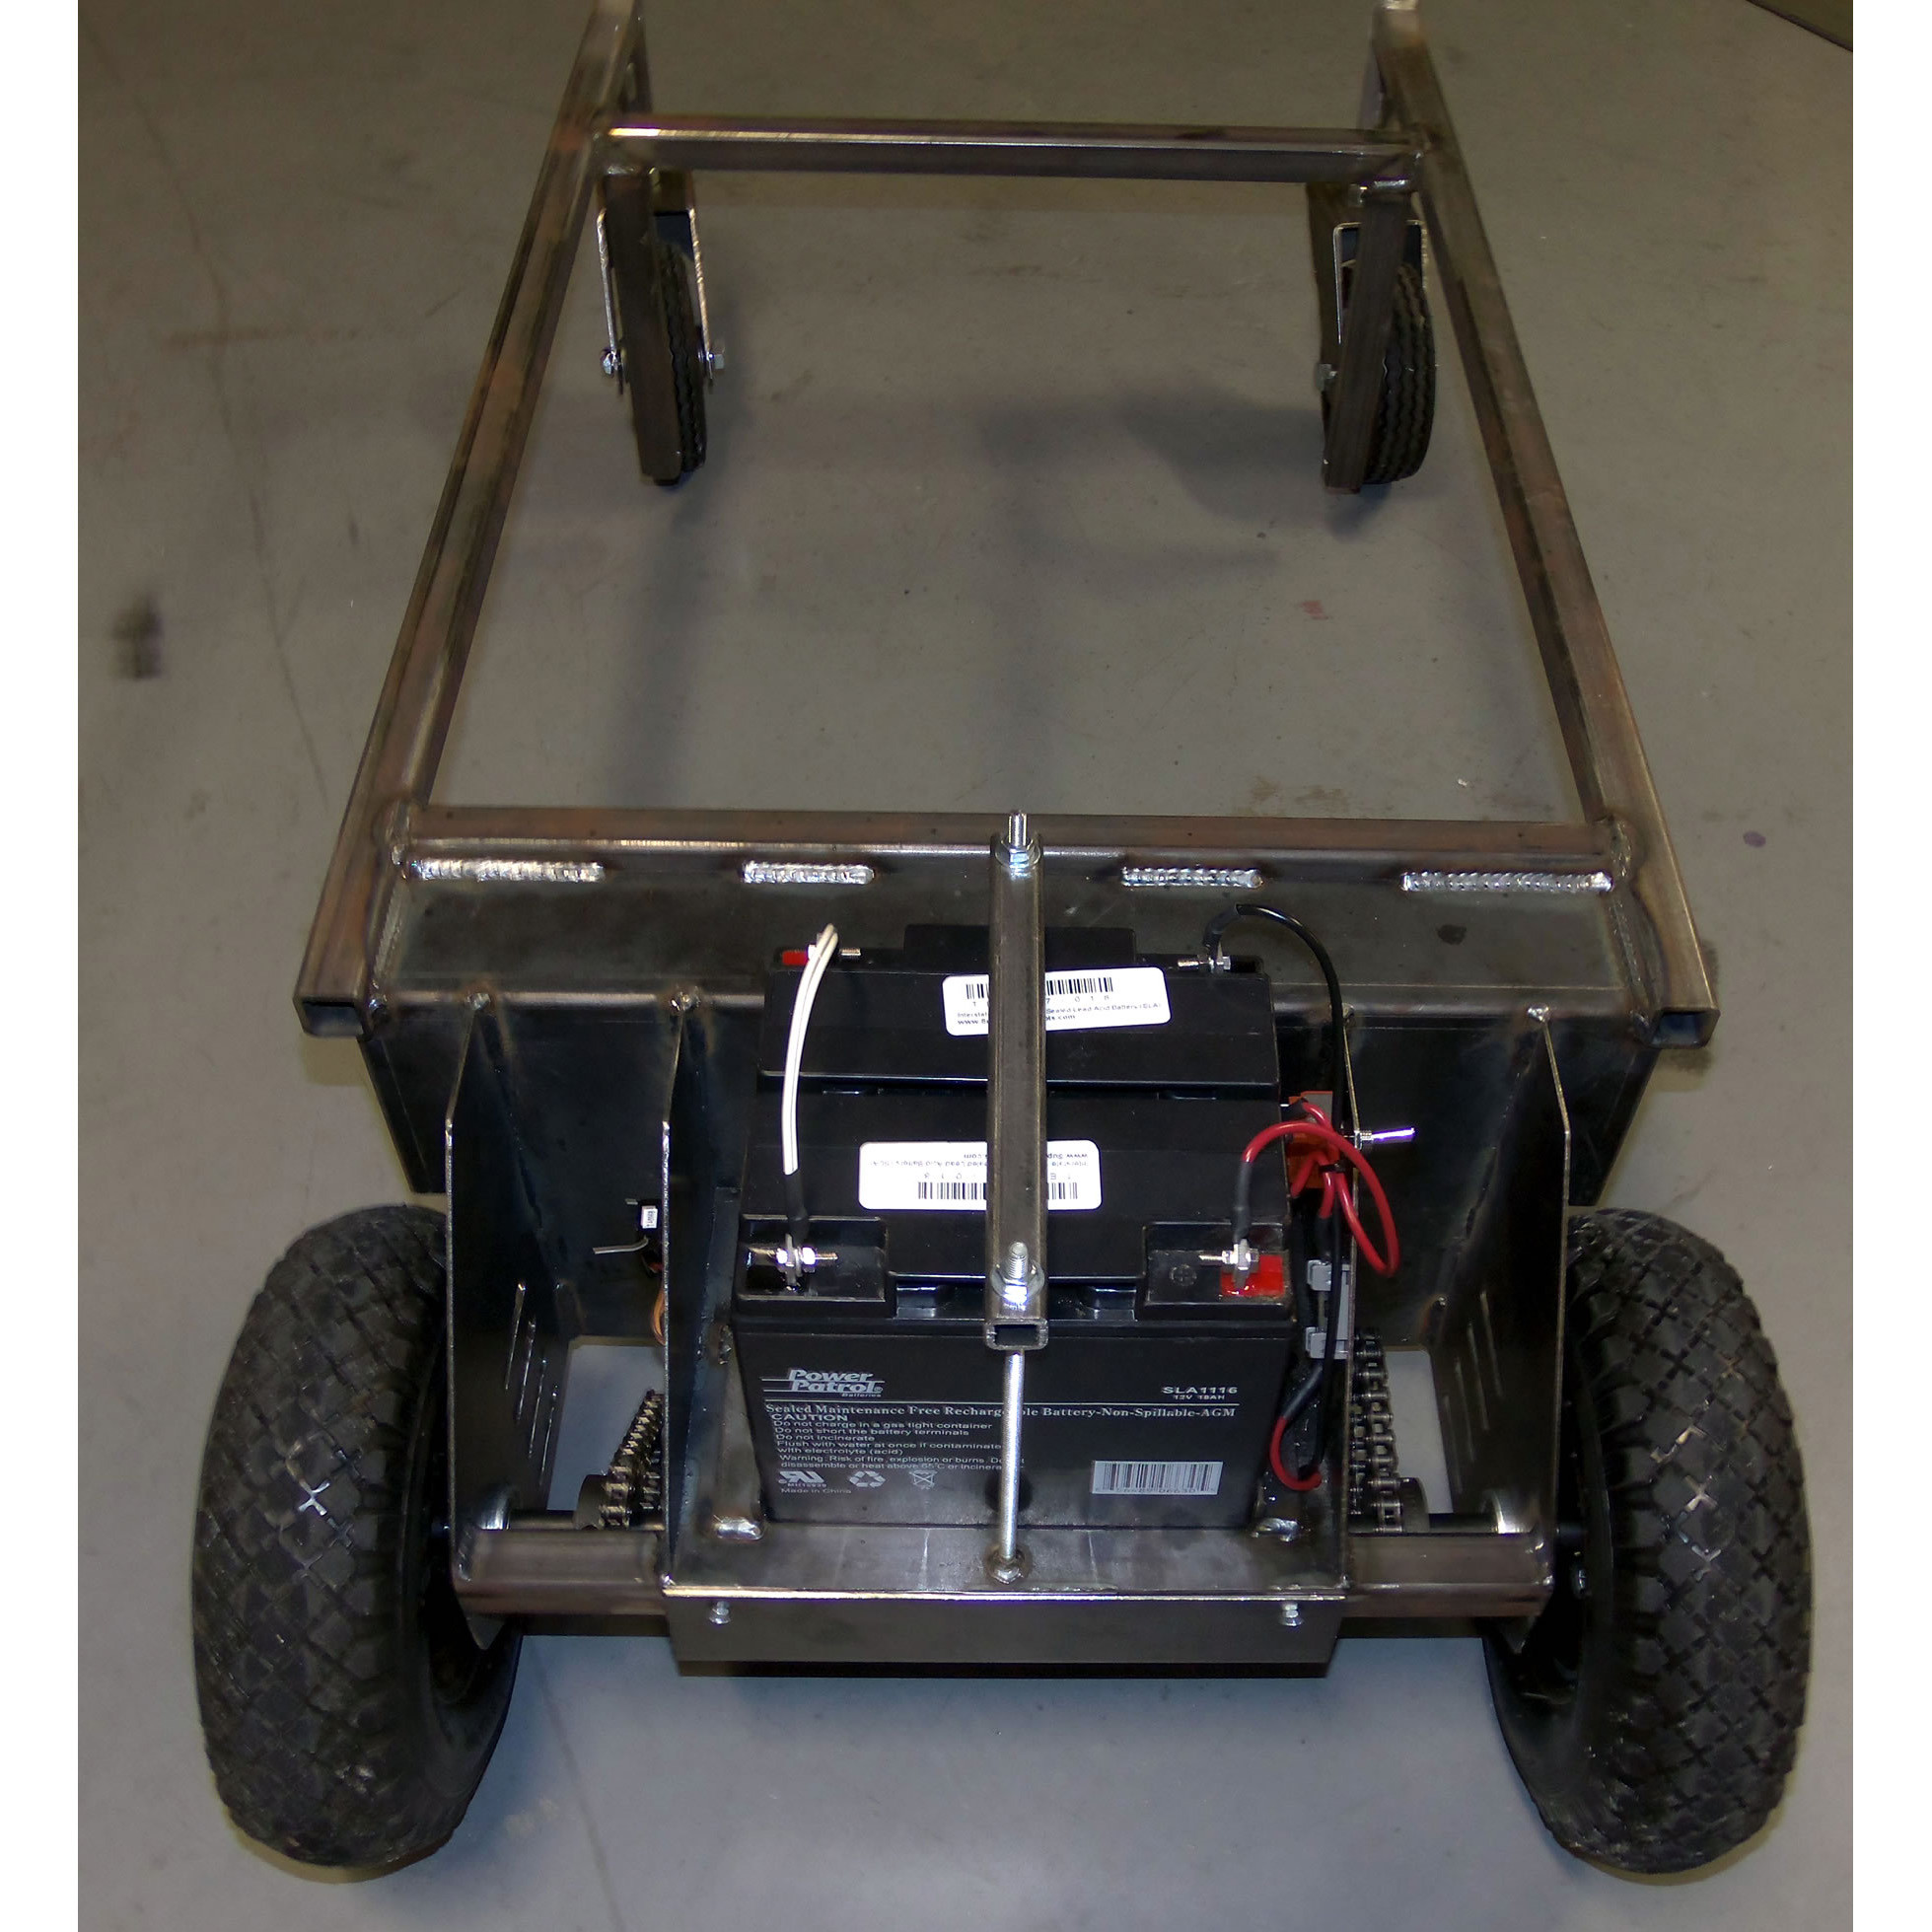 DIY Remote Control Lawn Mower Kit
 Diy Robotic Lawn Mower Kit